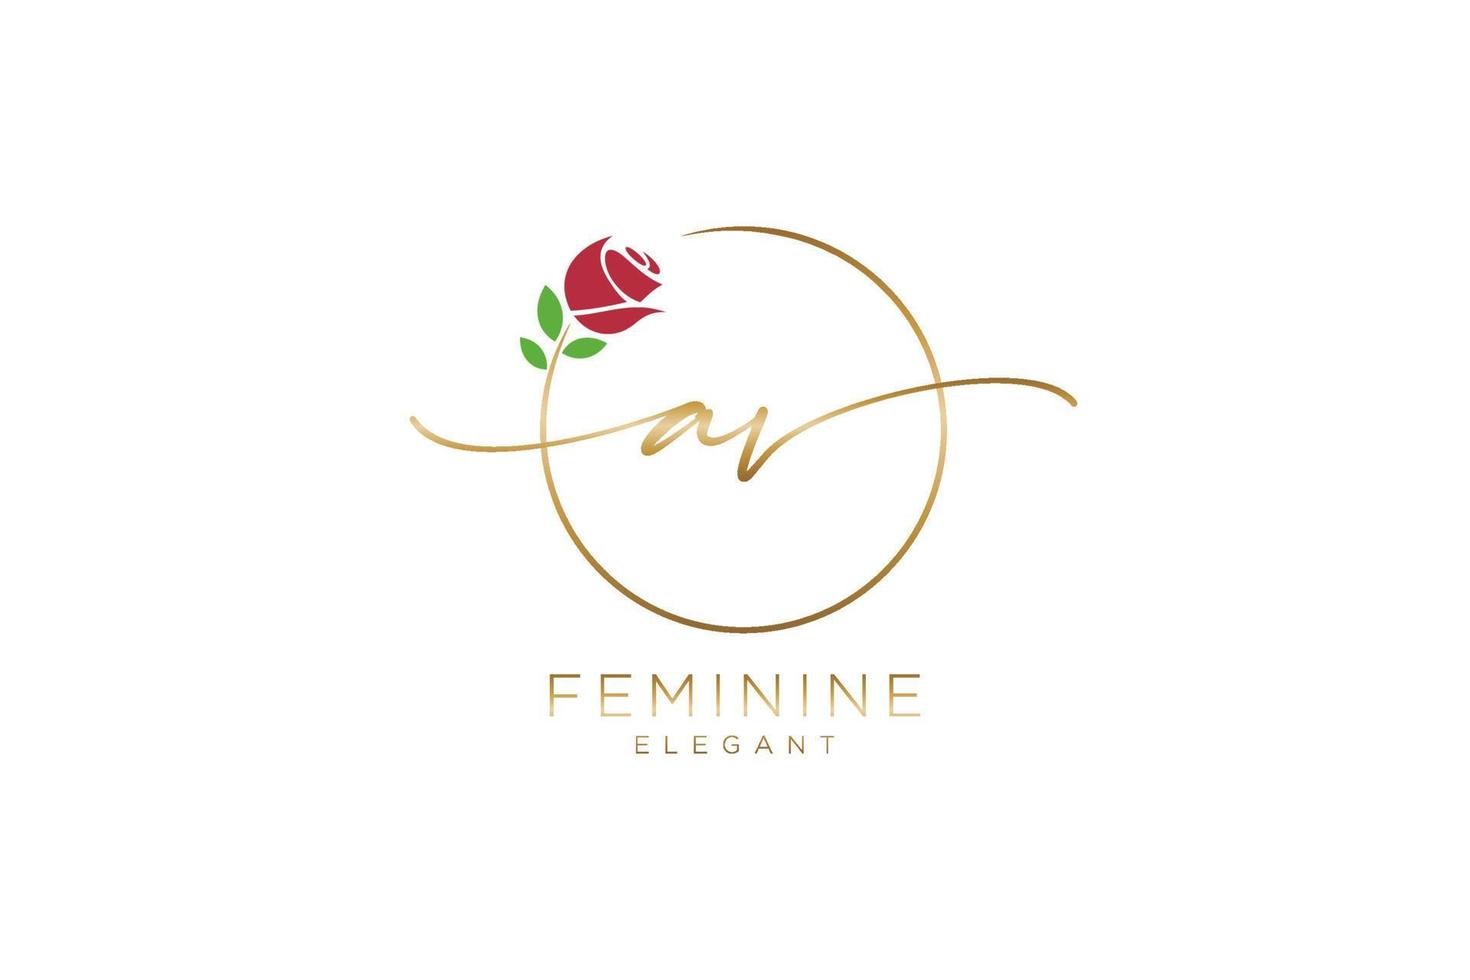 initial AV Feminine logo beauty monogram and elegant logo design, handwriting logo of initial signature, wedding, fashion, floral and botanical with creative template. vector